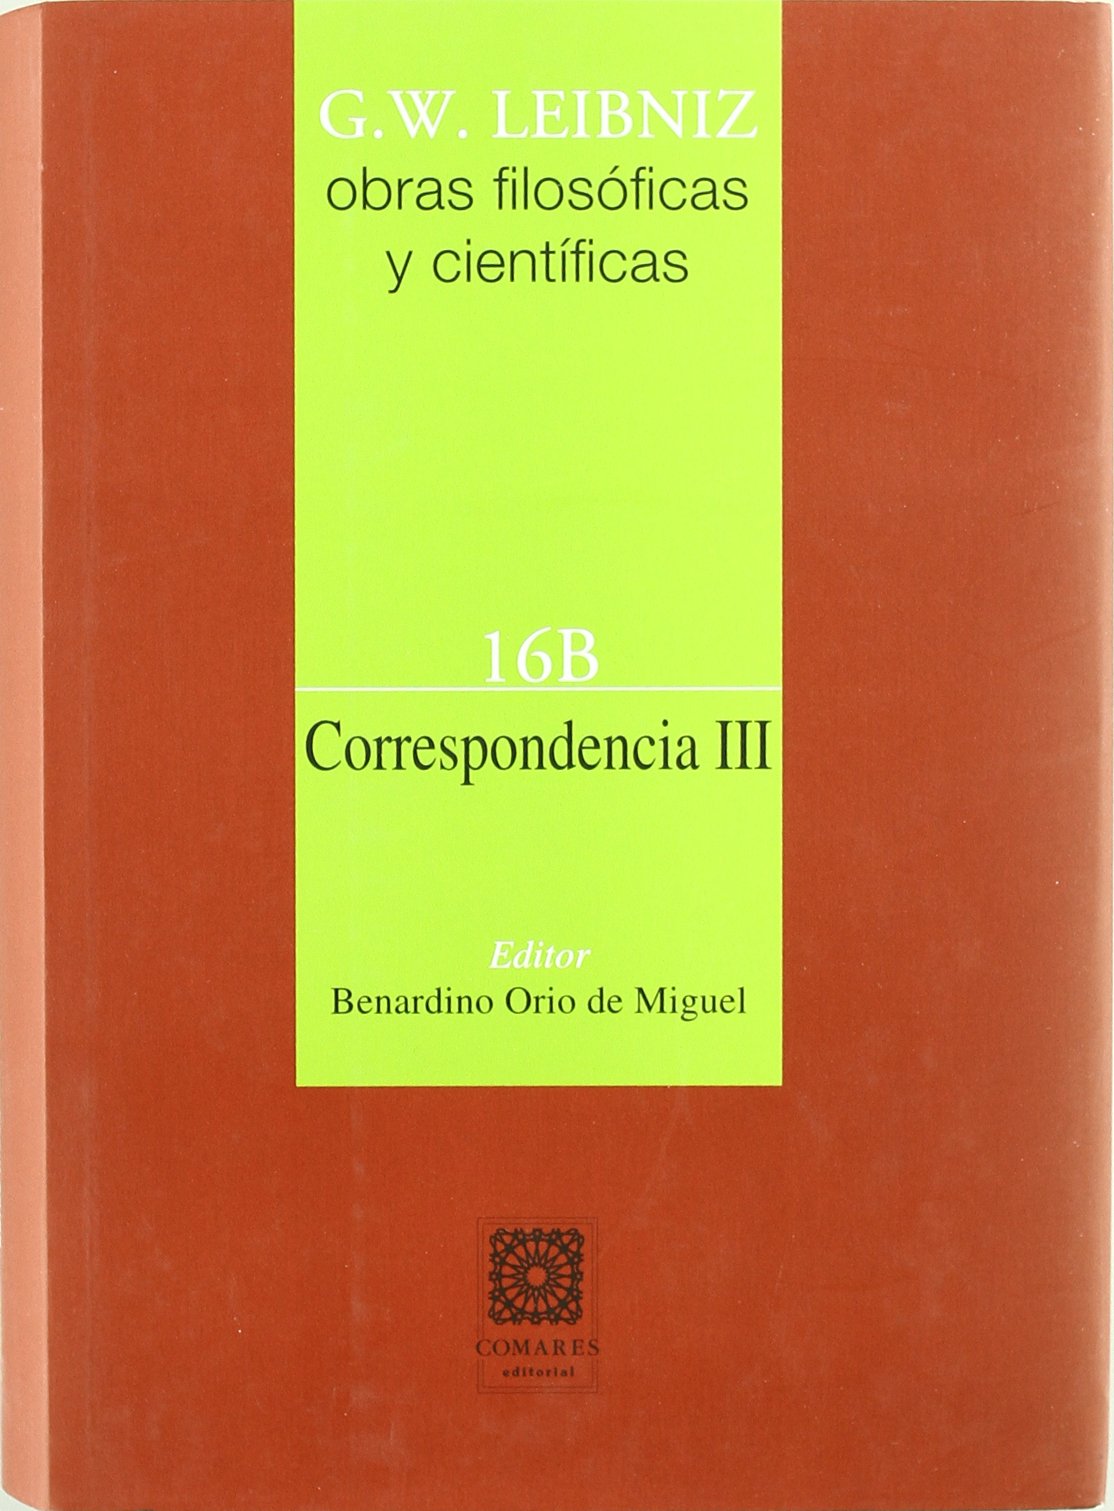 CORRESPONDENCIA III 16 B LEIBNIZ COMARES